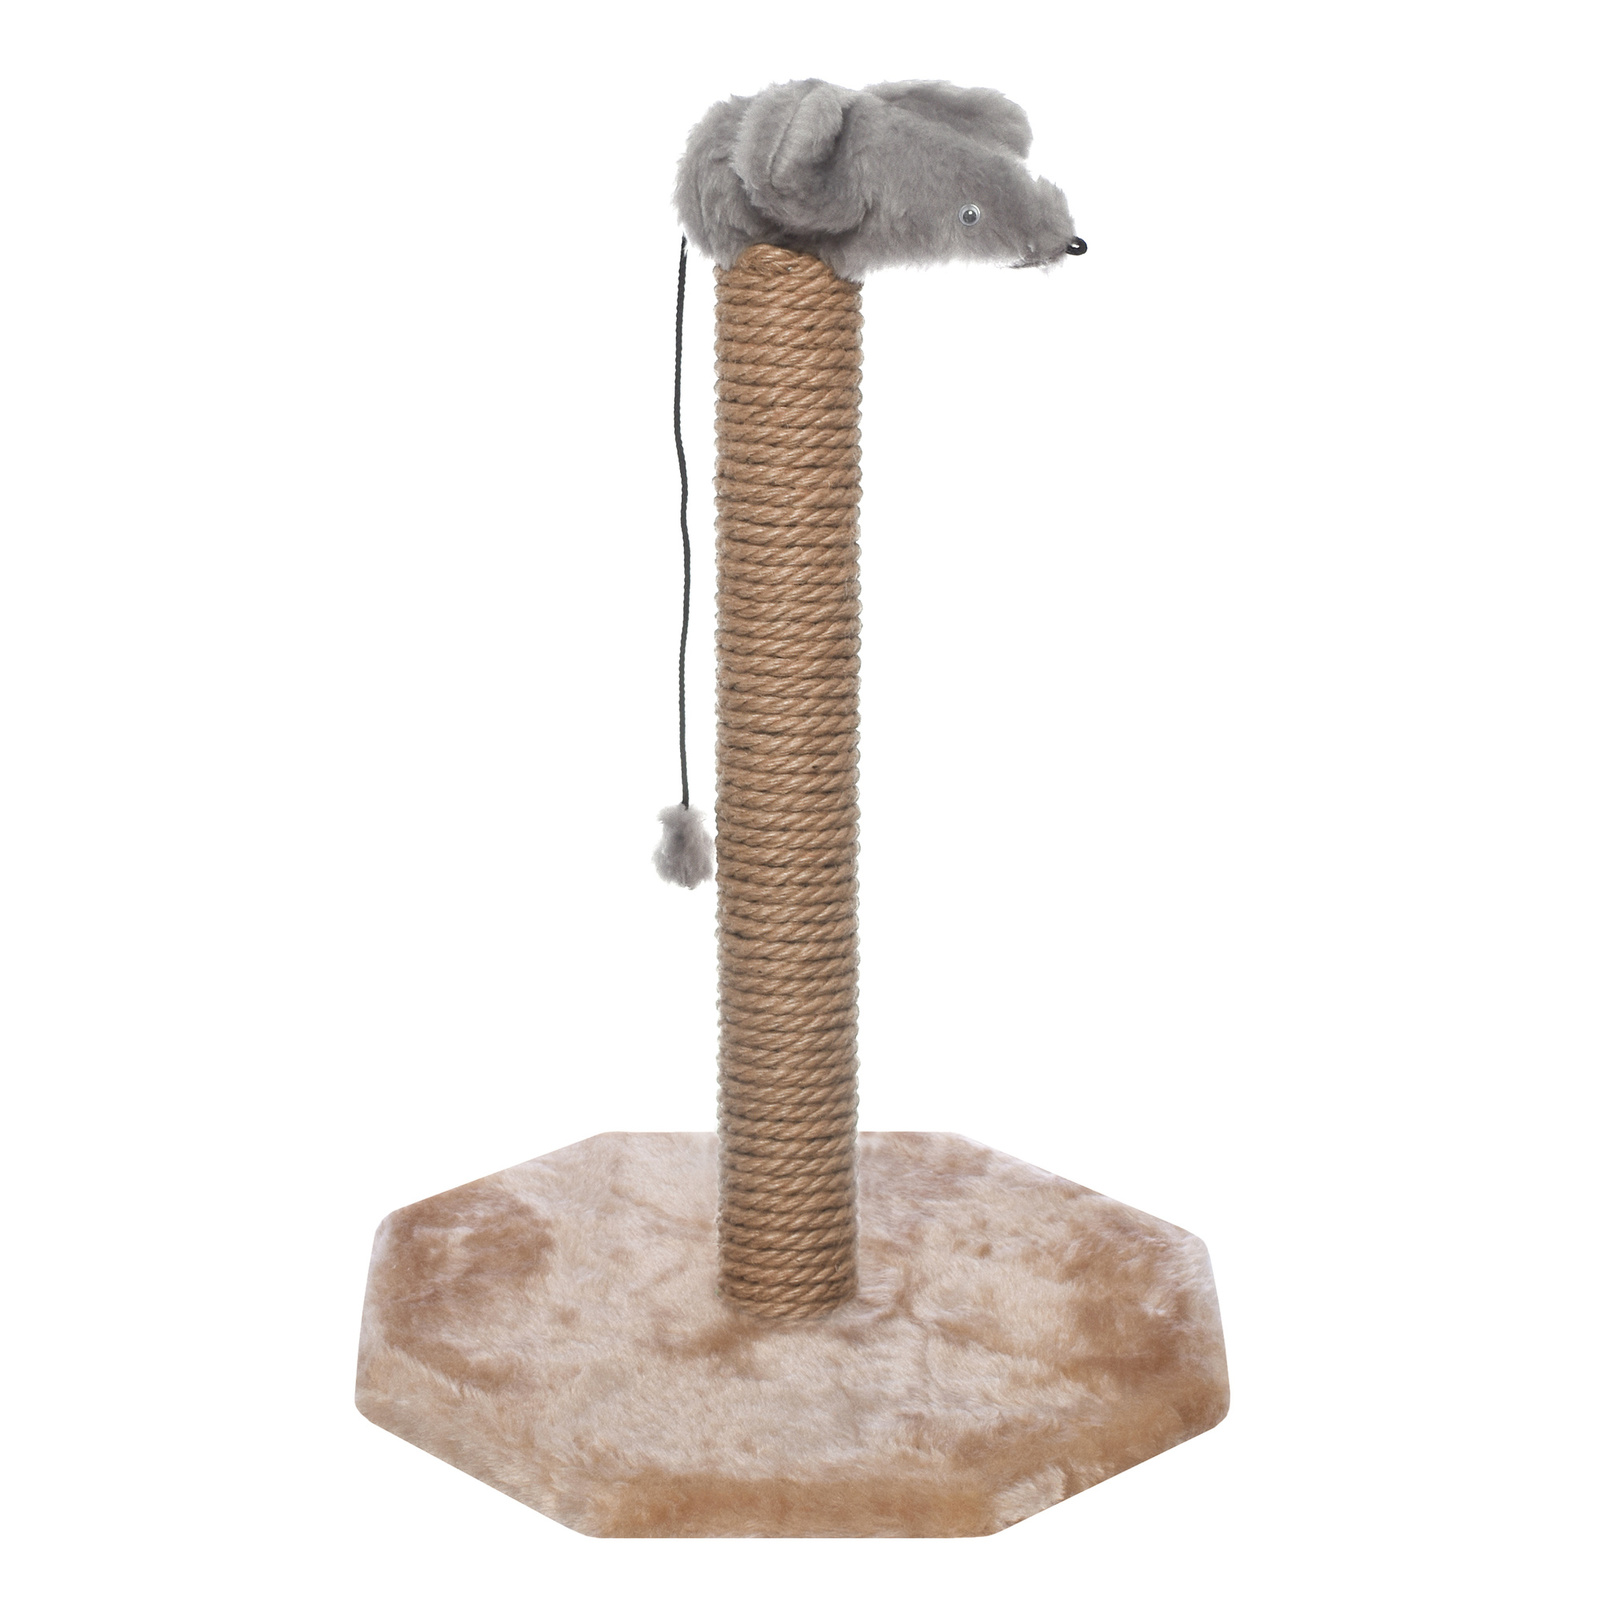 Когтеточки-столбики Yami-Yami когтеточка Мышка на столбике, джут (1,78 кг)